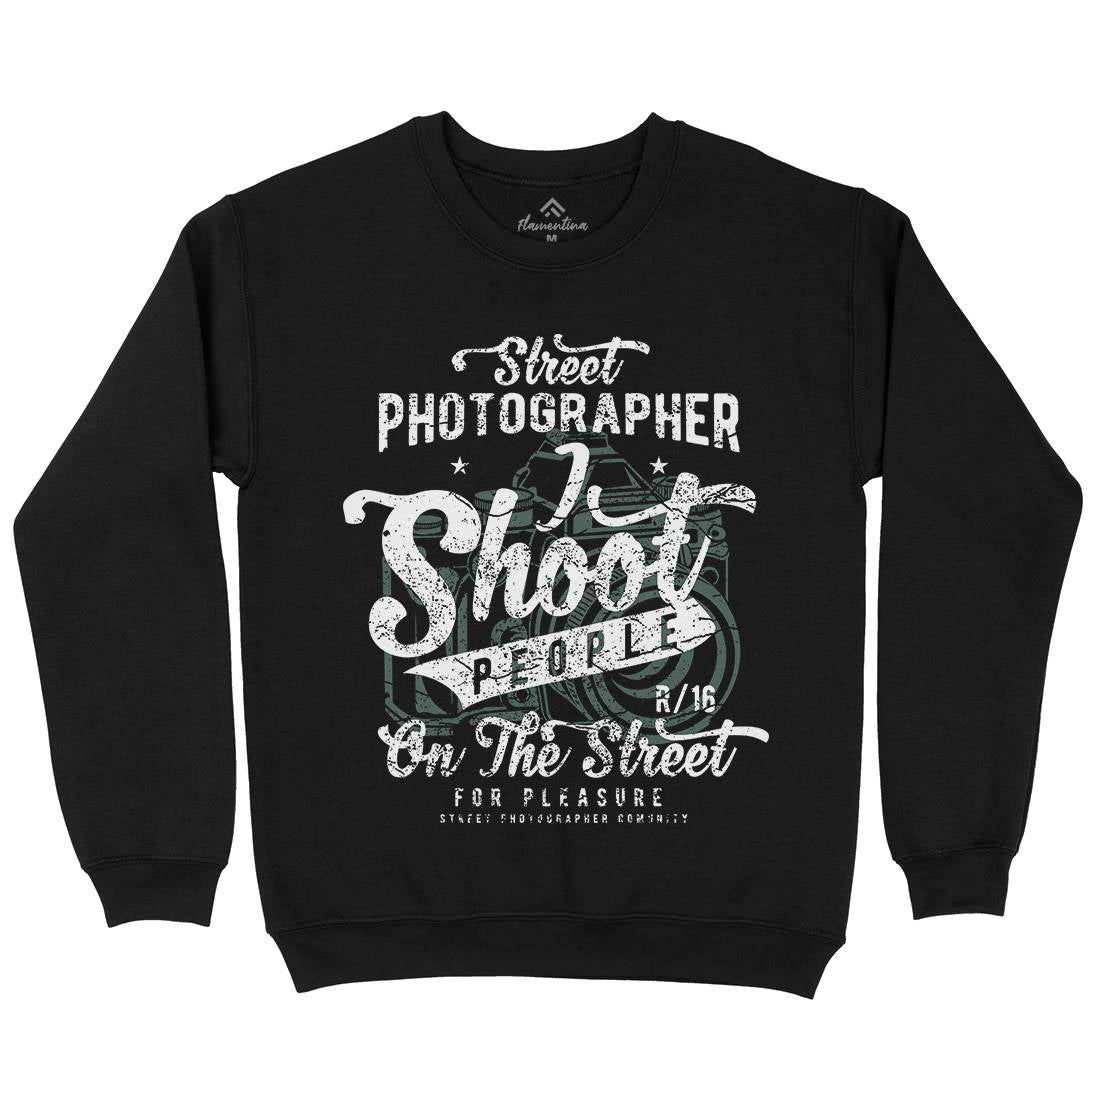 Street Photographer Kids Crew Neck Sweatshirt Media A162